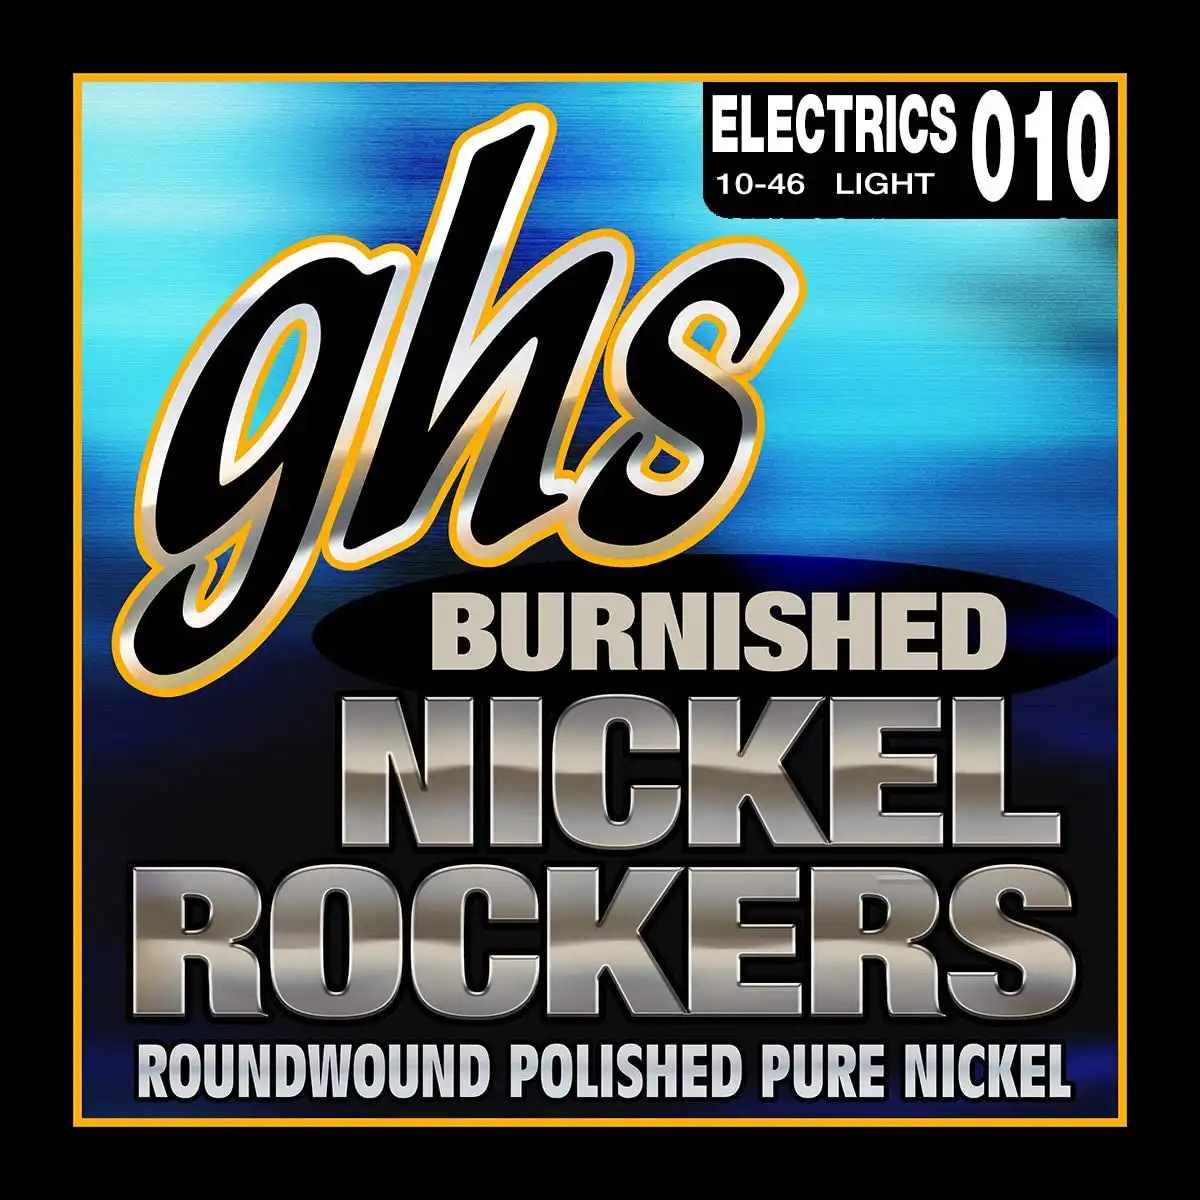 GHS BNR-L Burnished Nickel Rockers Light Roundwound Electric Guitar Strings (6-String Set, 10 - 46)